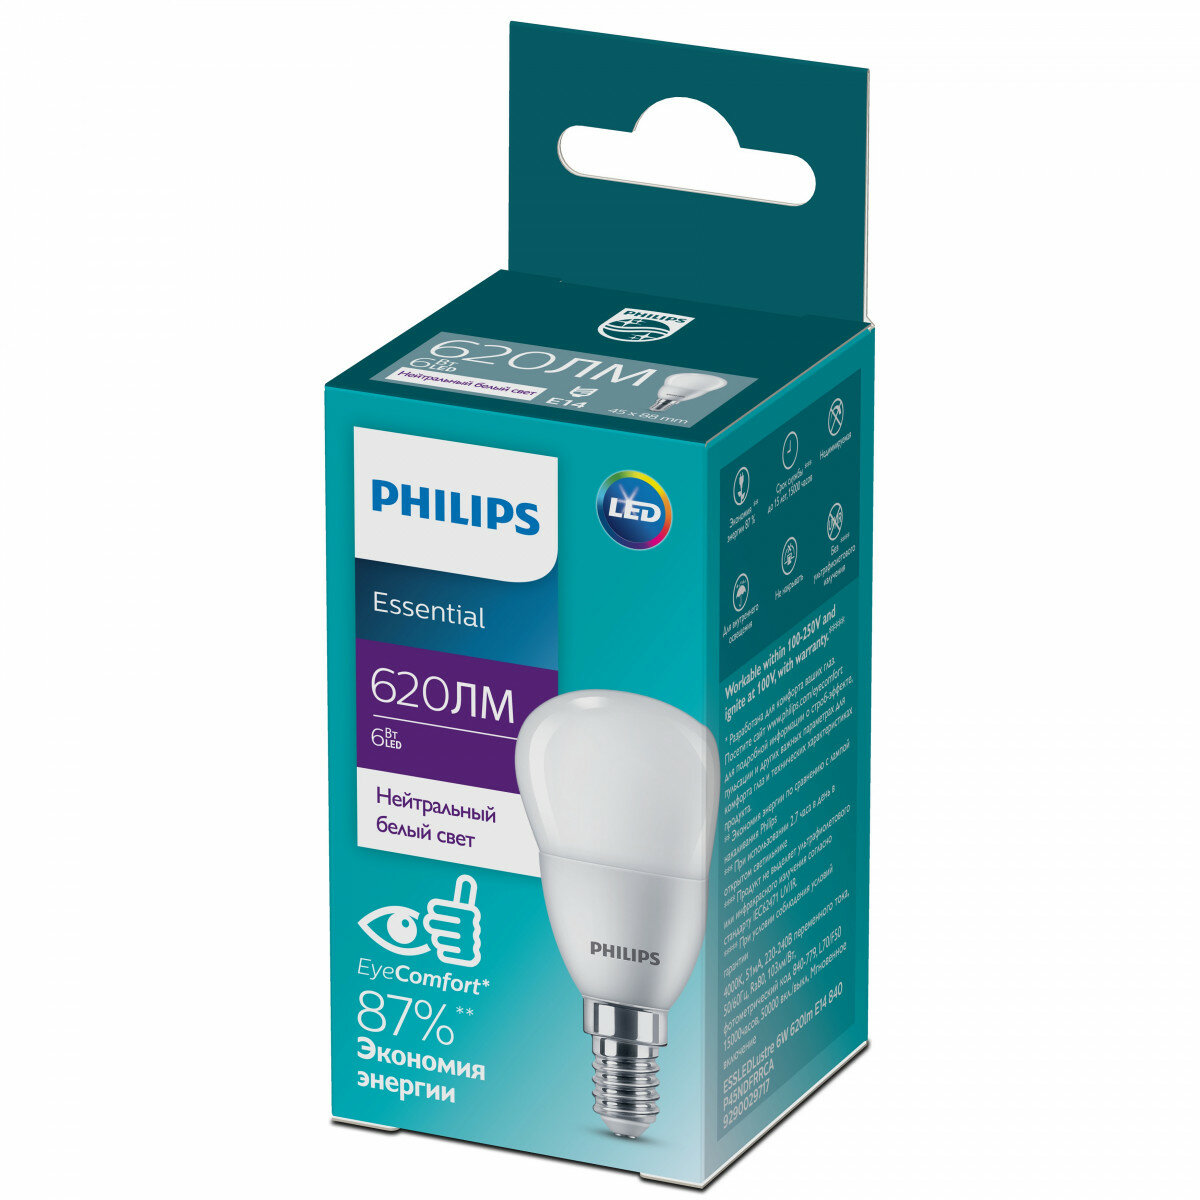 Philips Лампочка светодиодная Philips ESS LEDLustre P45 6Вт 4000K Е14 / E14 шар матовый нейтральный белый свет